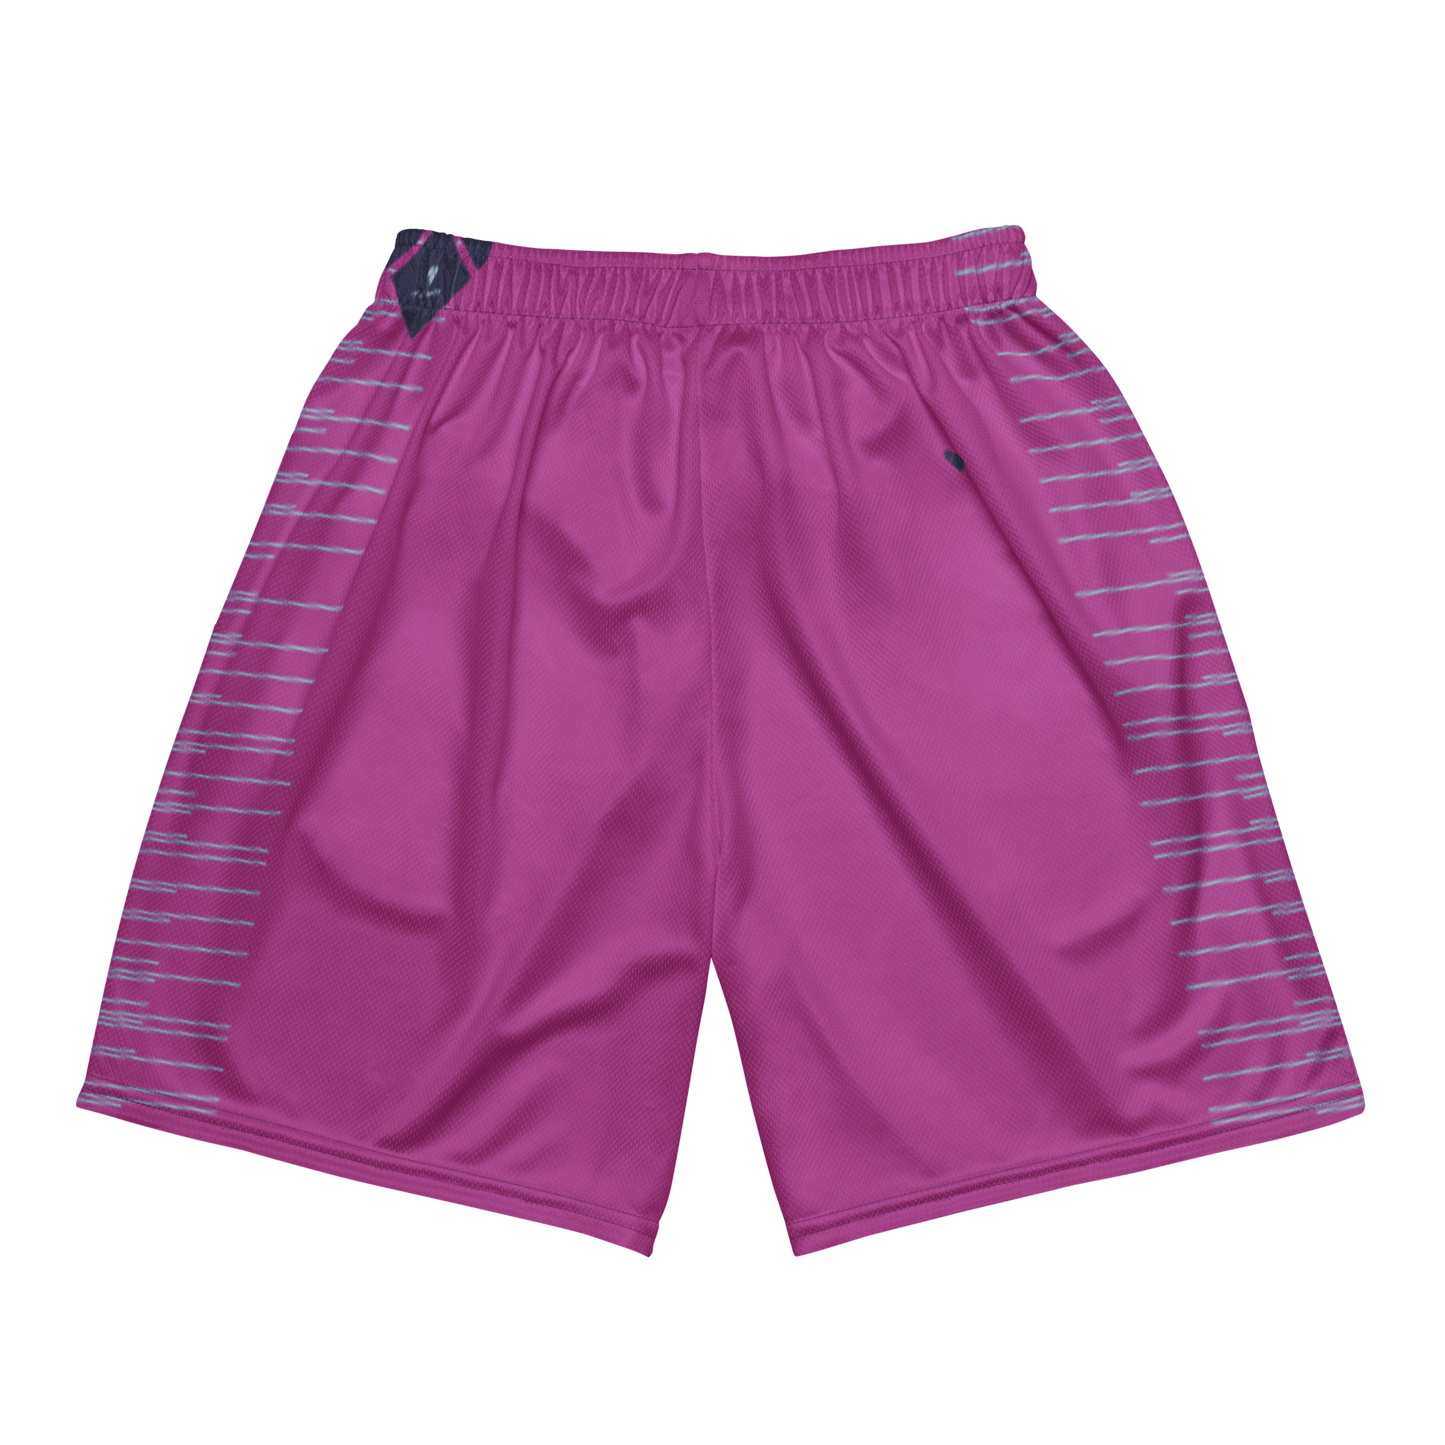 Unique Gradient Stripe Design on Fucsia Pink Dual Mesh Shorts